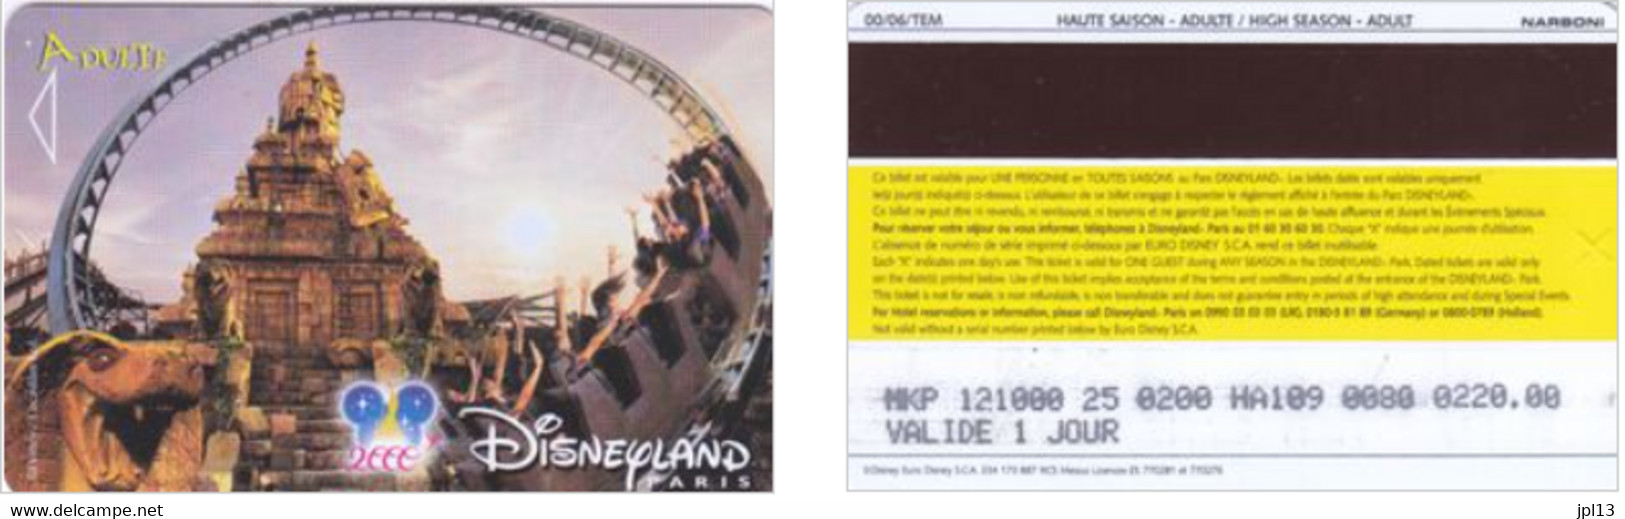 Passeport Disney - France - Disneyland Paris - 2000 - Pasaportes Disney